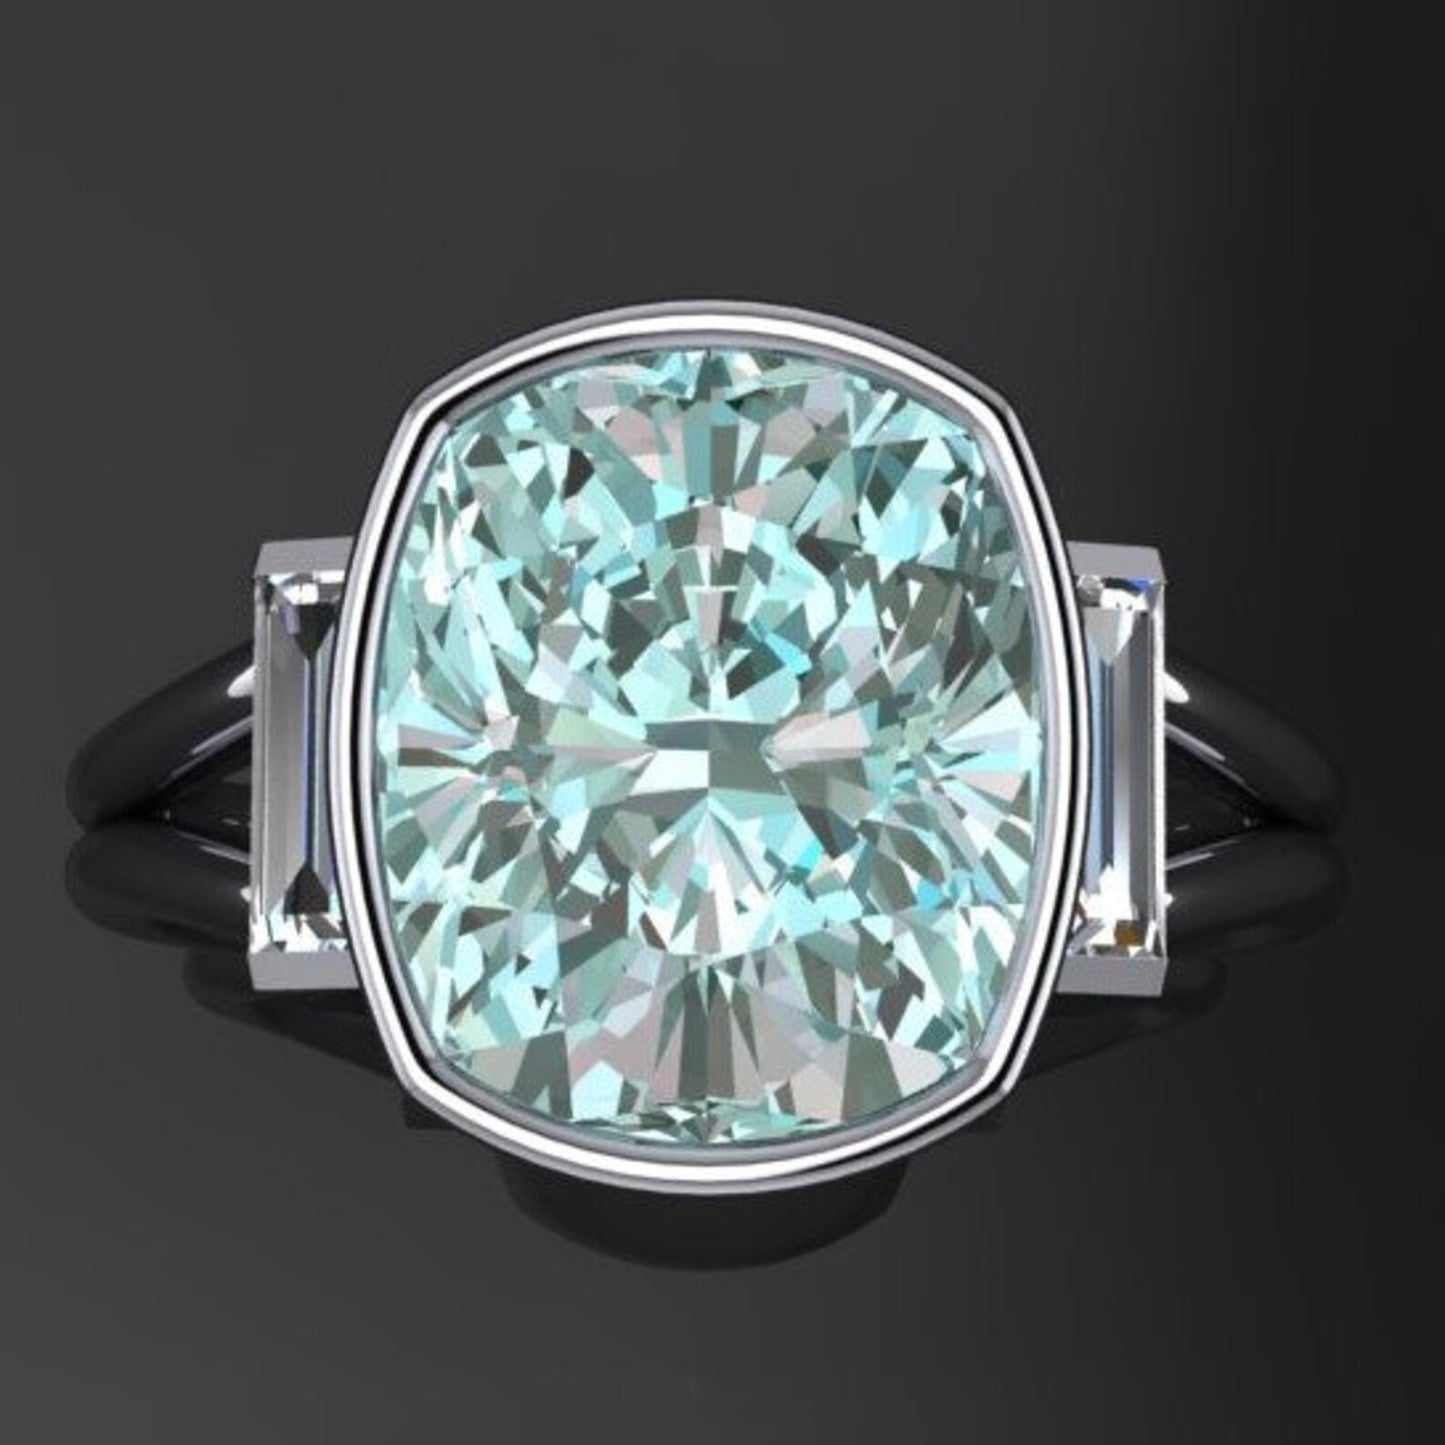 azul ring - 6 carat light blue/green cushion cut ZAYA moissanite engagement ring - J Hollywood Designs